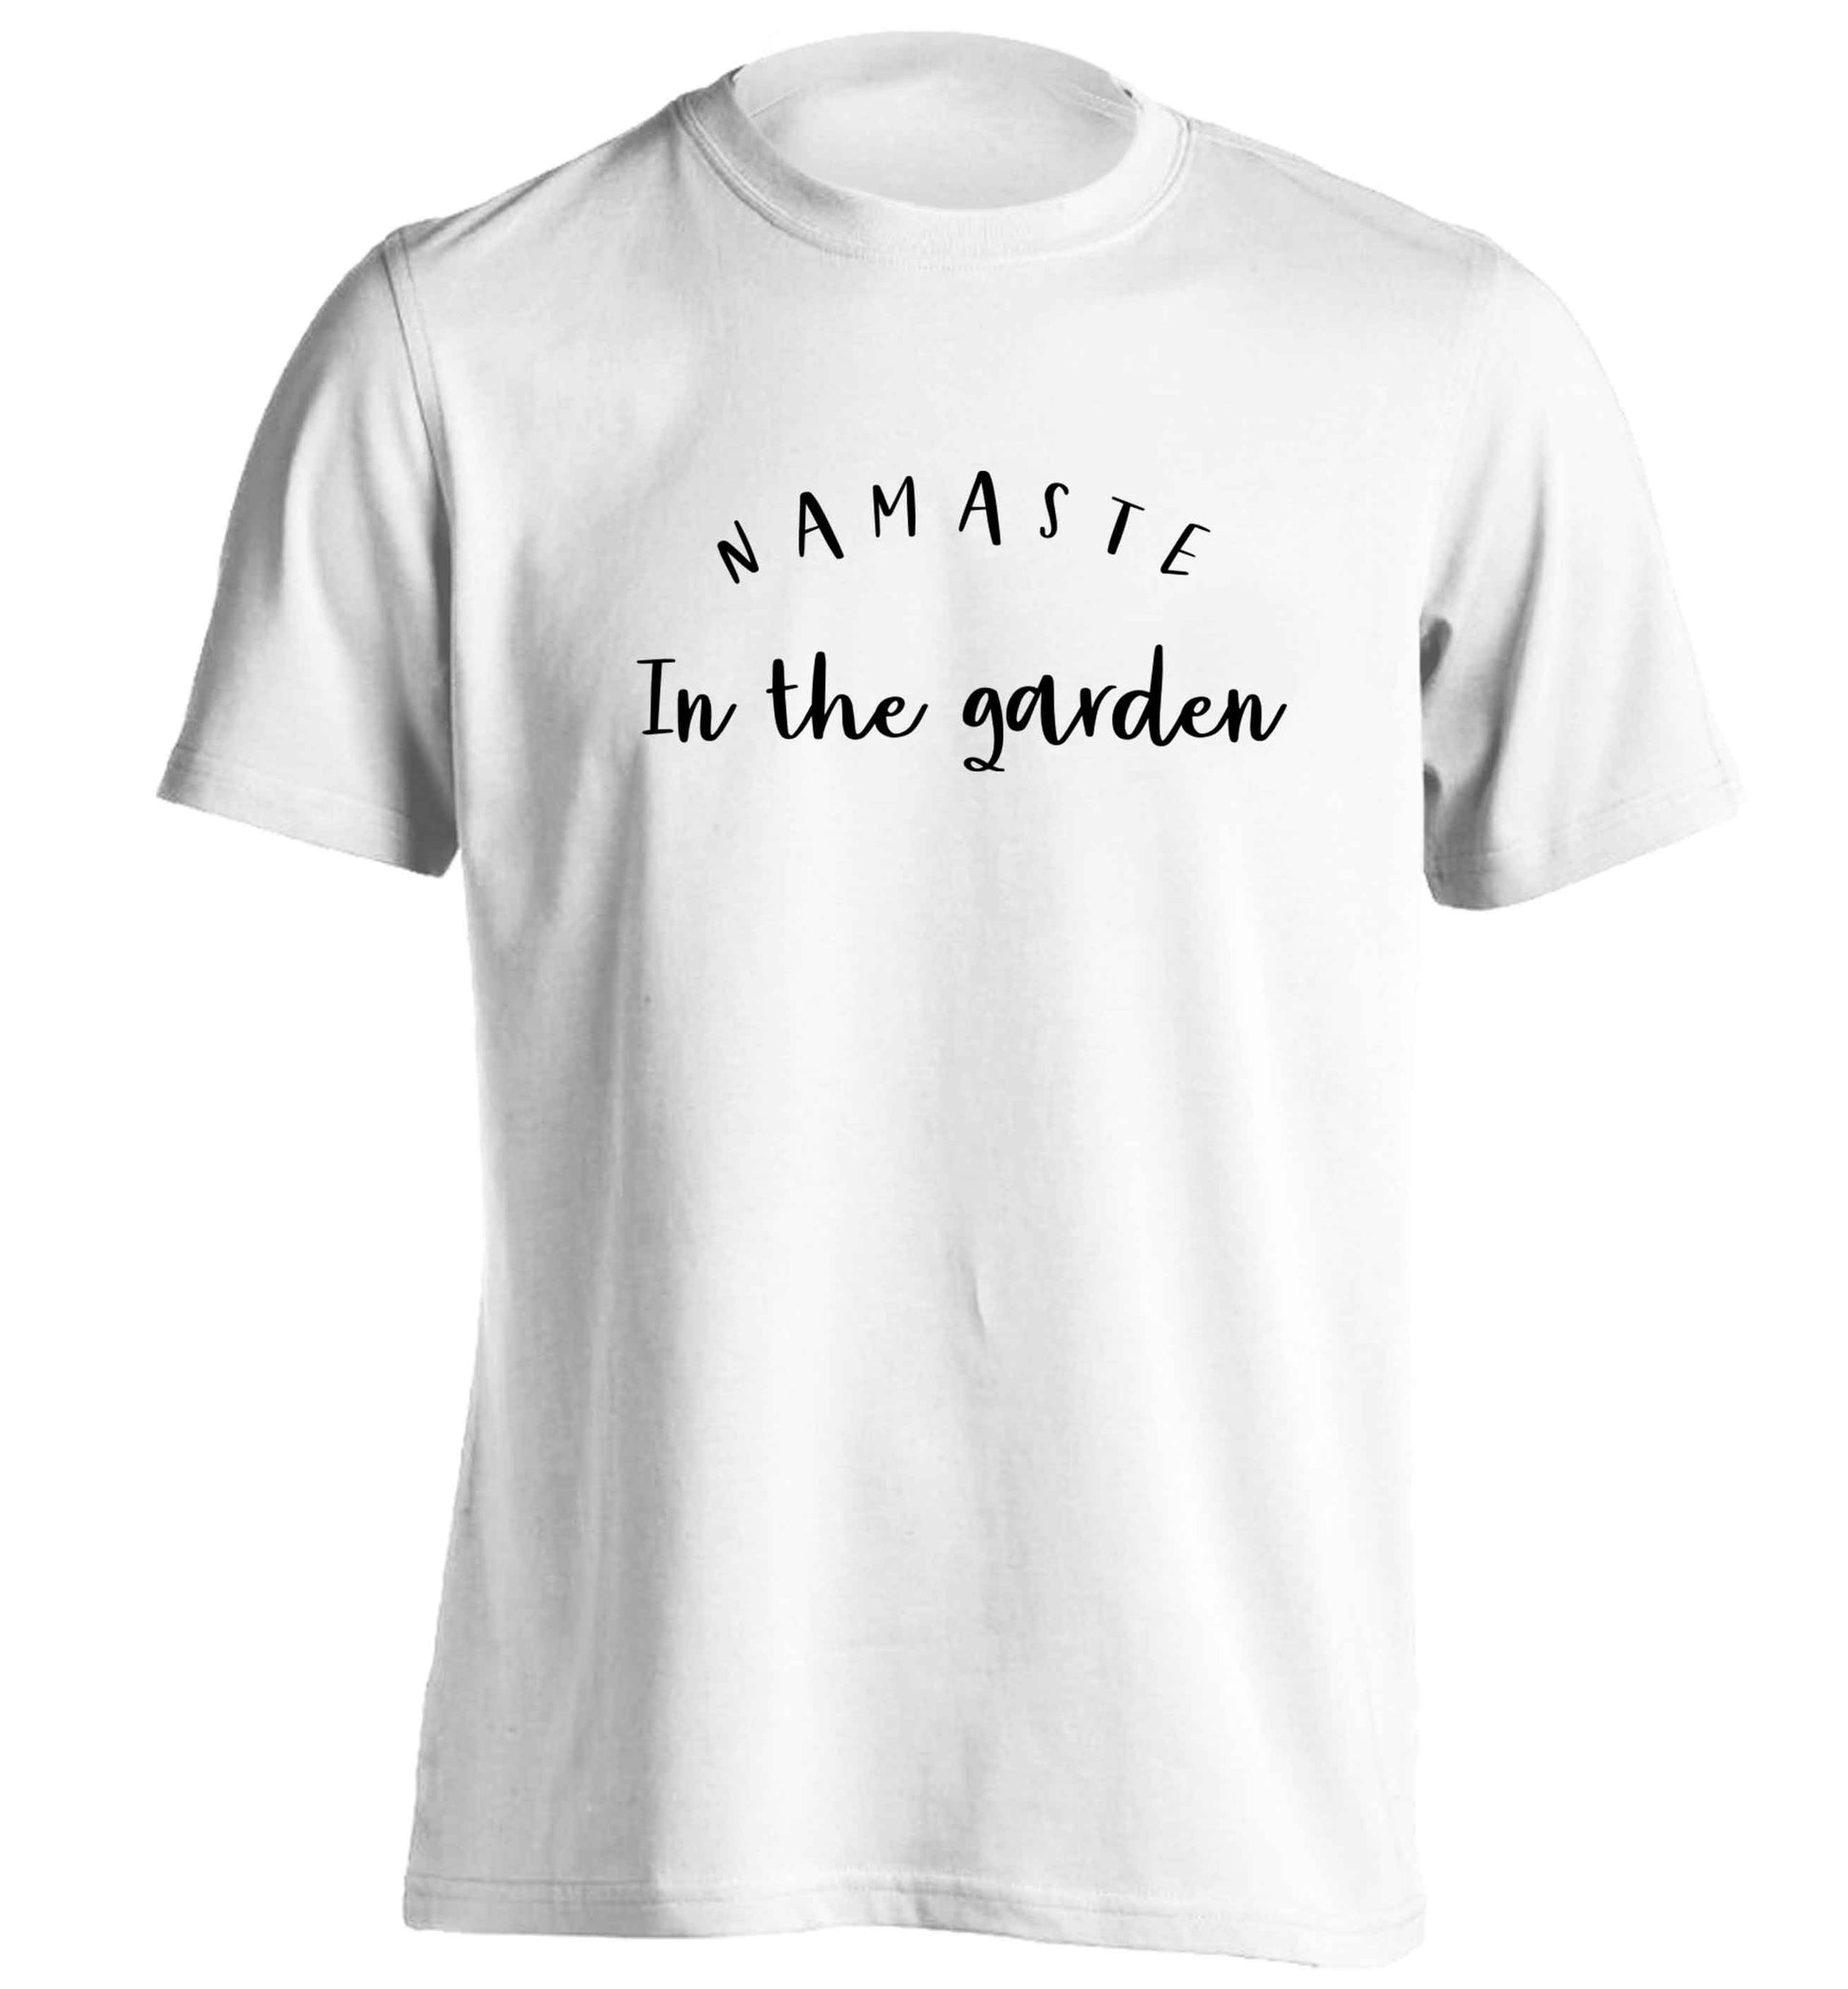 Namaste in the garden adults unisex white Tshirt 2XL